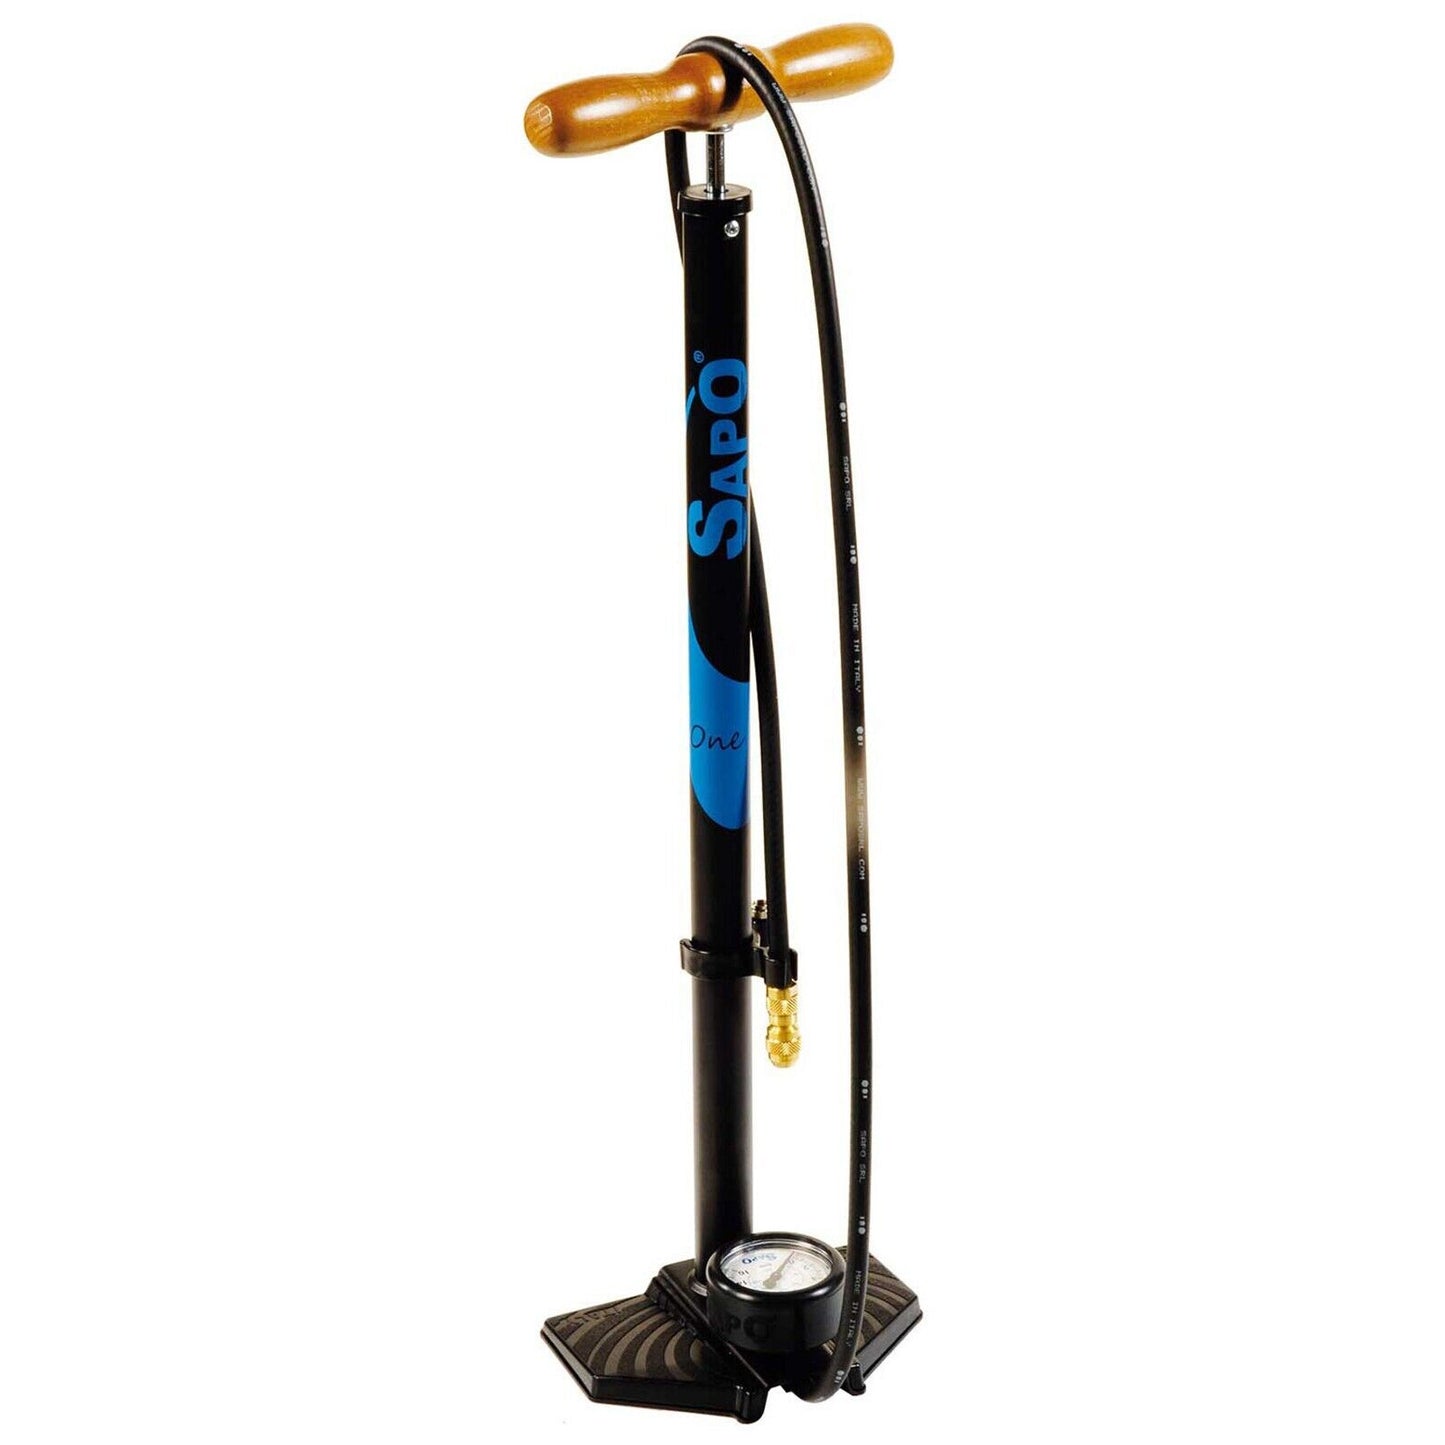 SAPO One Professional High Pressure Bicycle Floor Pump (Black/Blue) 16bar/232psi